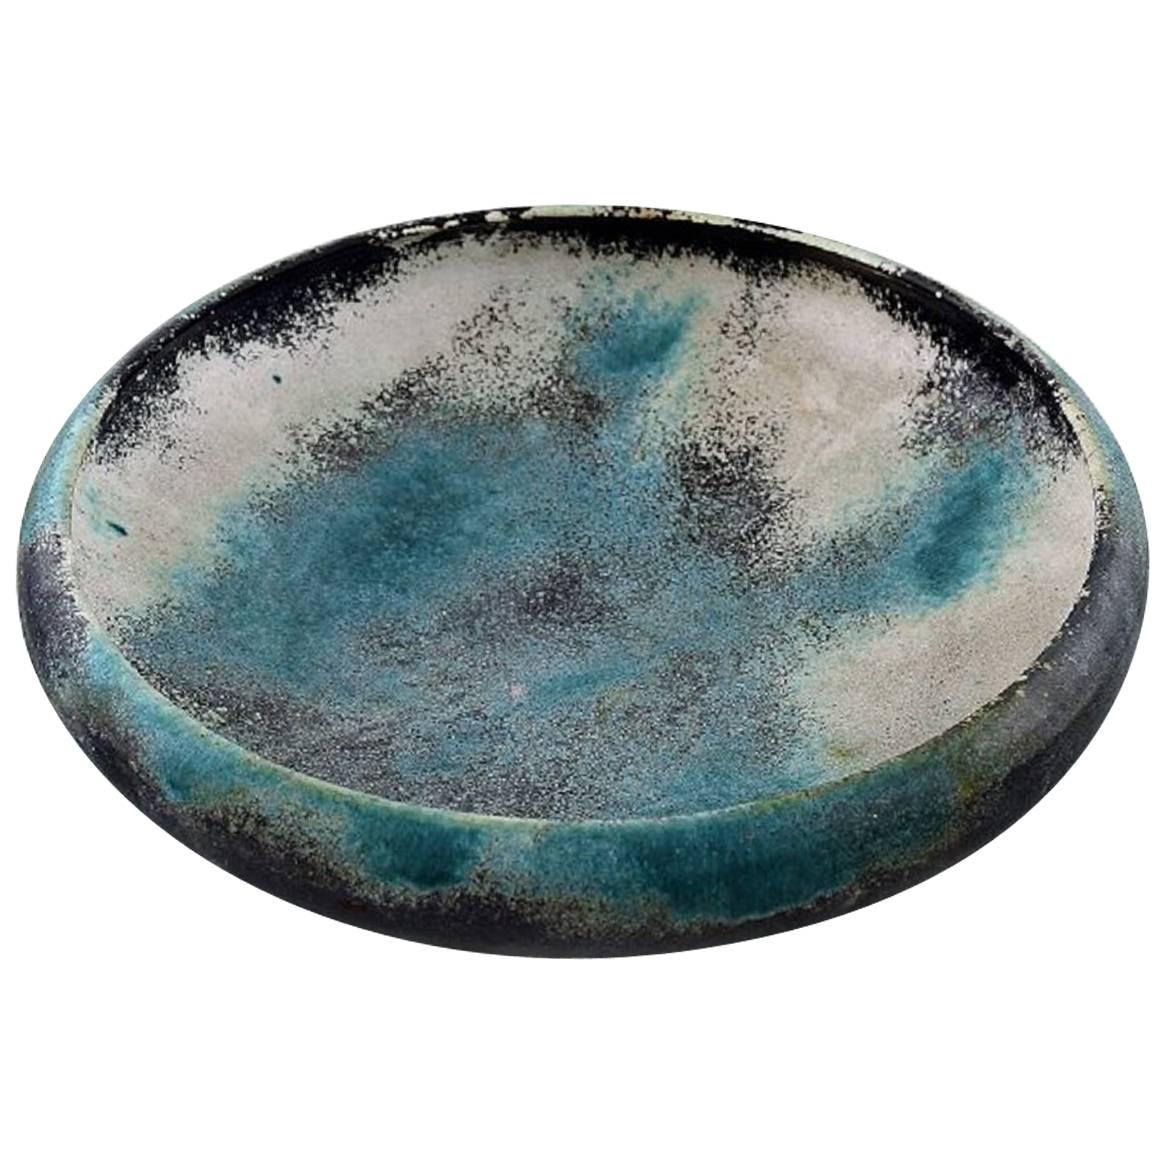 Jens Thirslund Unique Kähler Bowl Decorated with Green Glaze